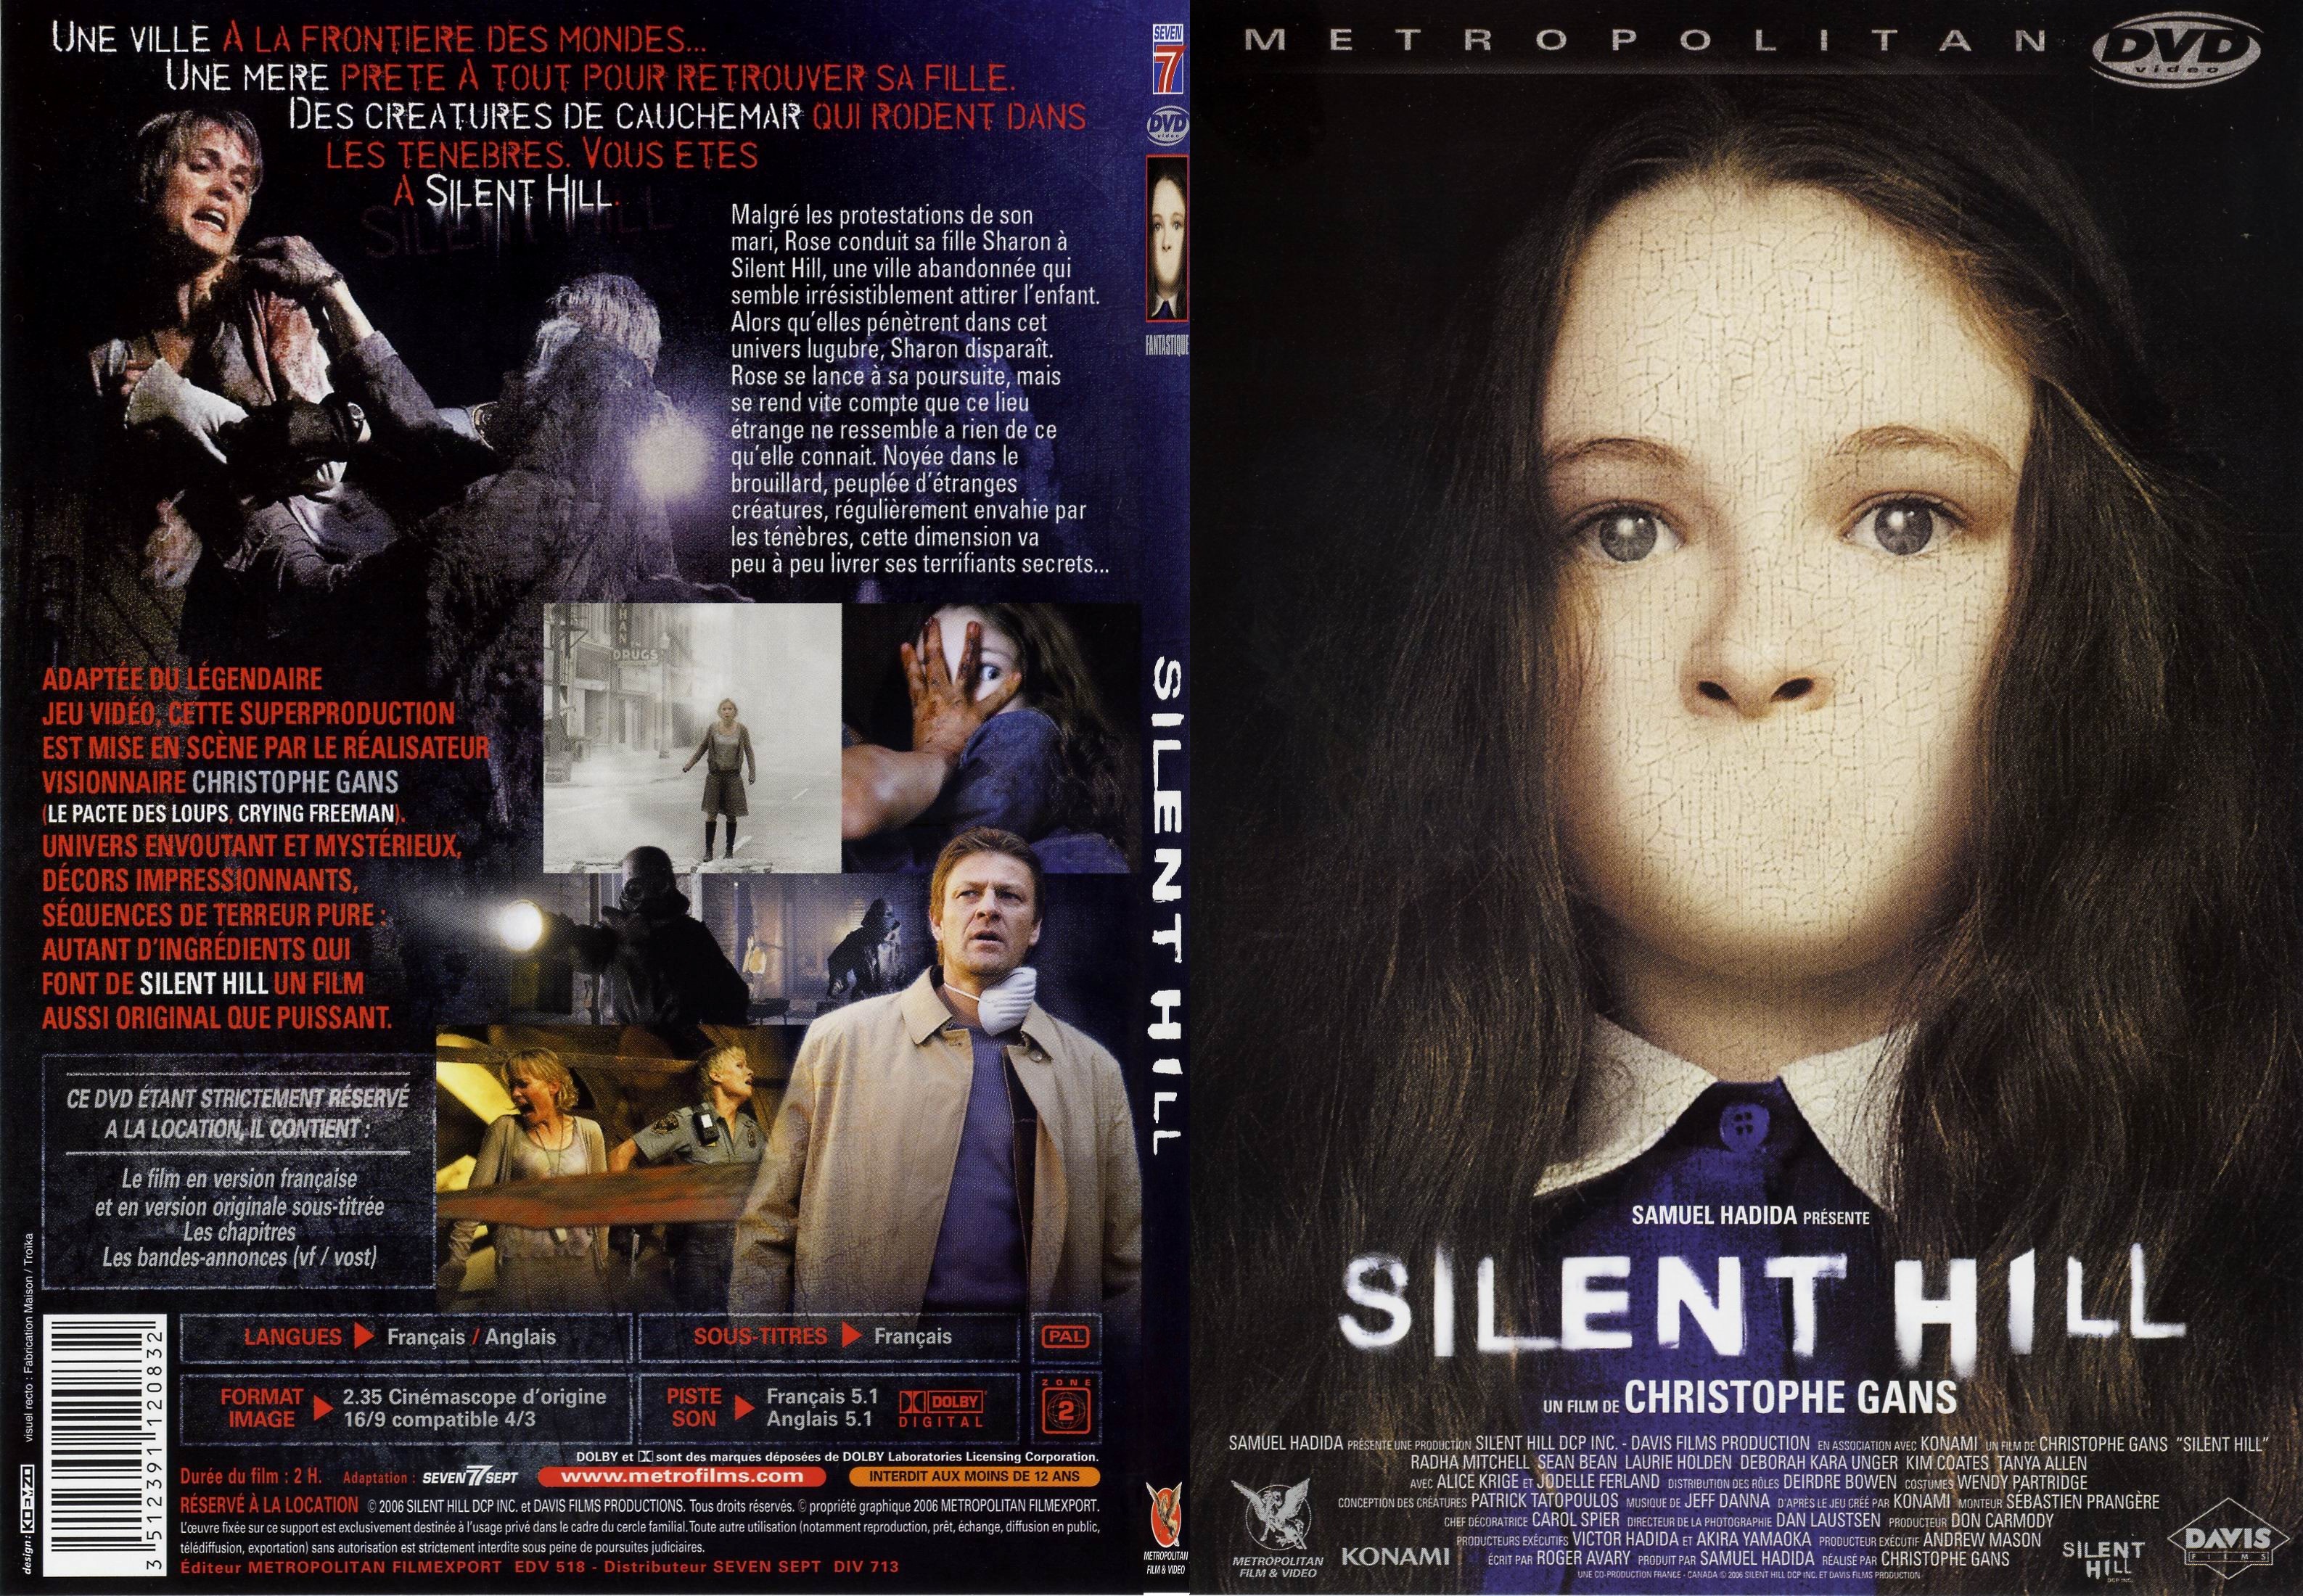 Jaquette DVD Silent hill - SLIM